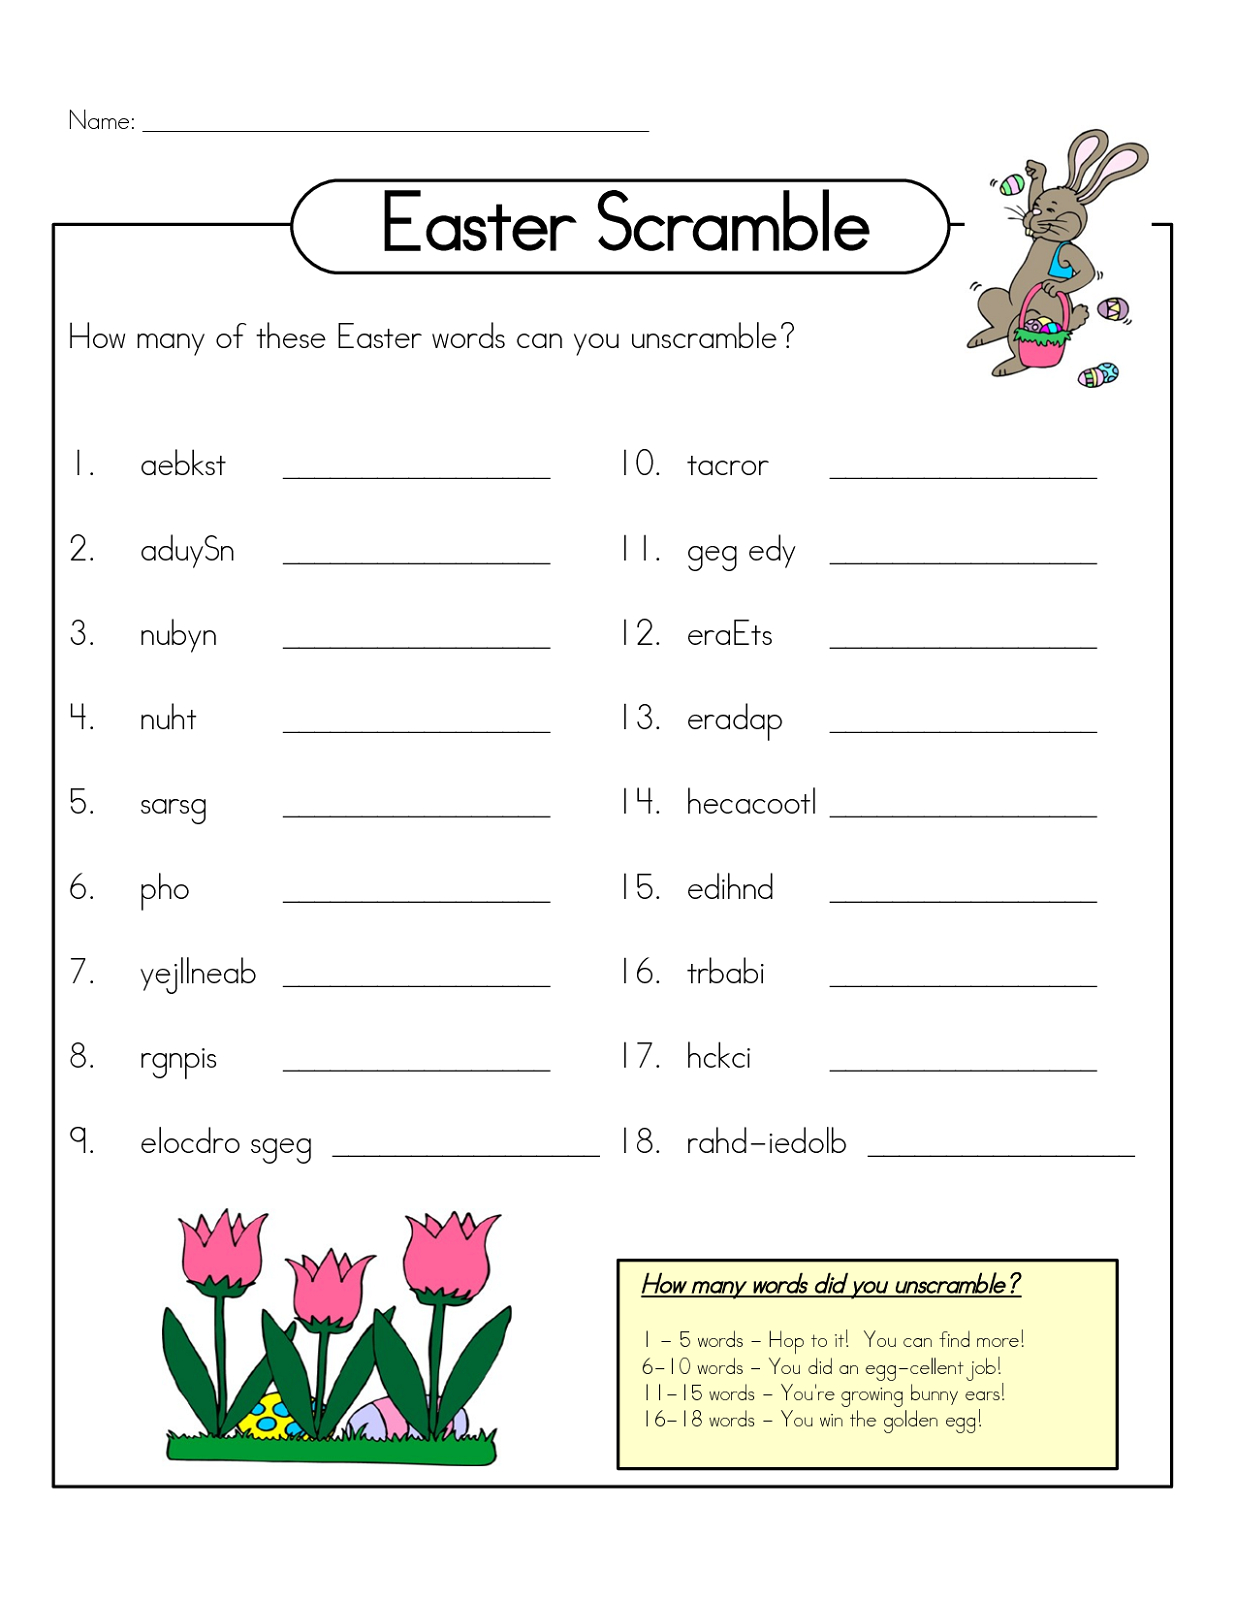 Free Word Scrambles Worksheets | Activity Shelter - Free Printable Word Scramble Worksheets